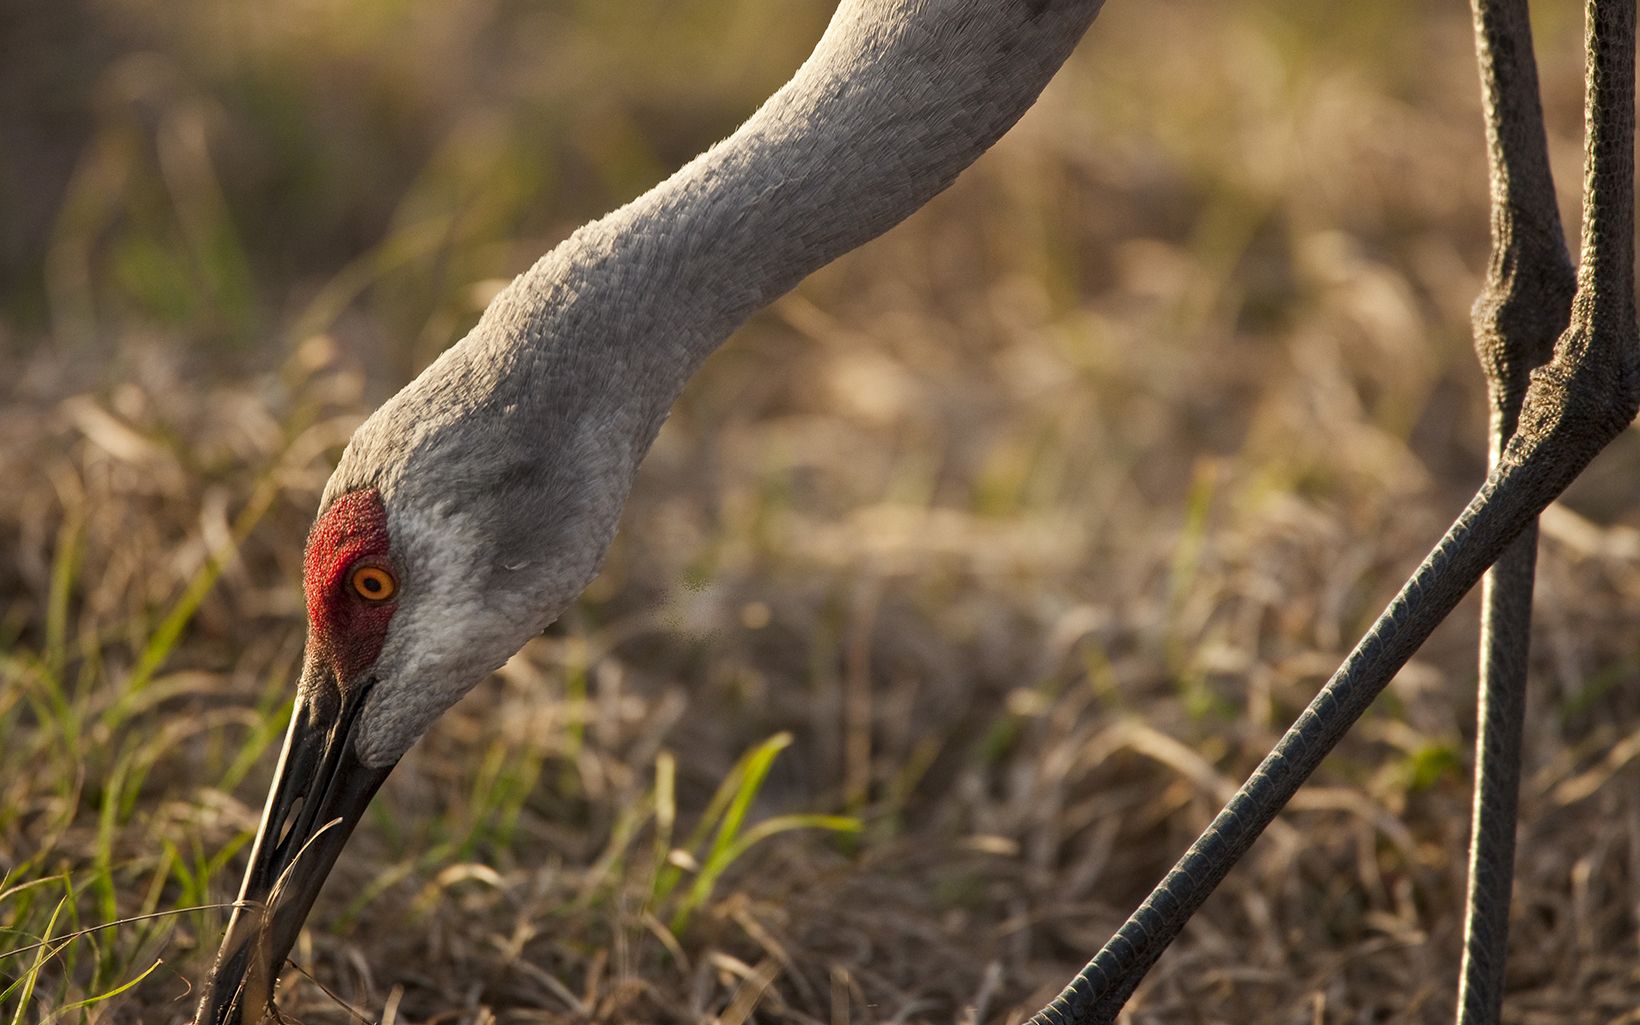 Sandhill crane at Disney Wilderness Preserve. Sandhill cranes thrive at Disney Wilderness Preserve in Florida. © David Moynahan